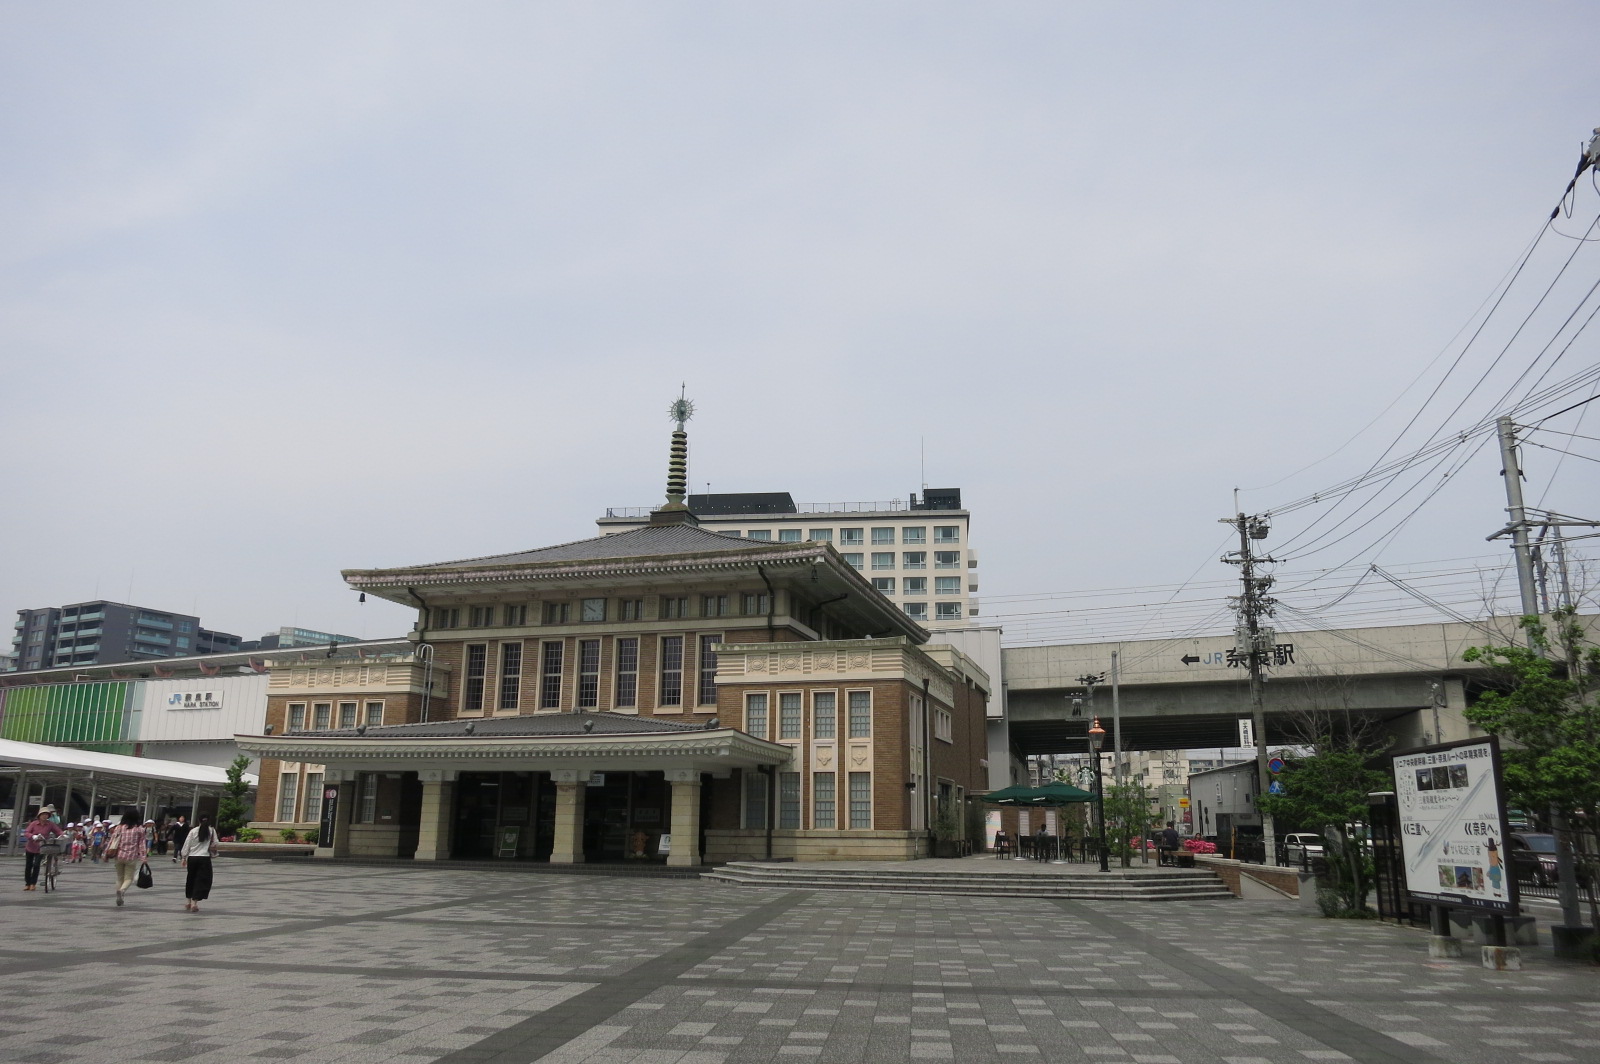 JR奈良駅観光案内所は、JR奈良駅旧駅舎の1部を利用した建物とのこと。趣があり、一見の価値ありです。